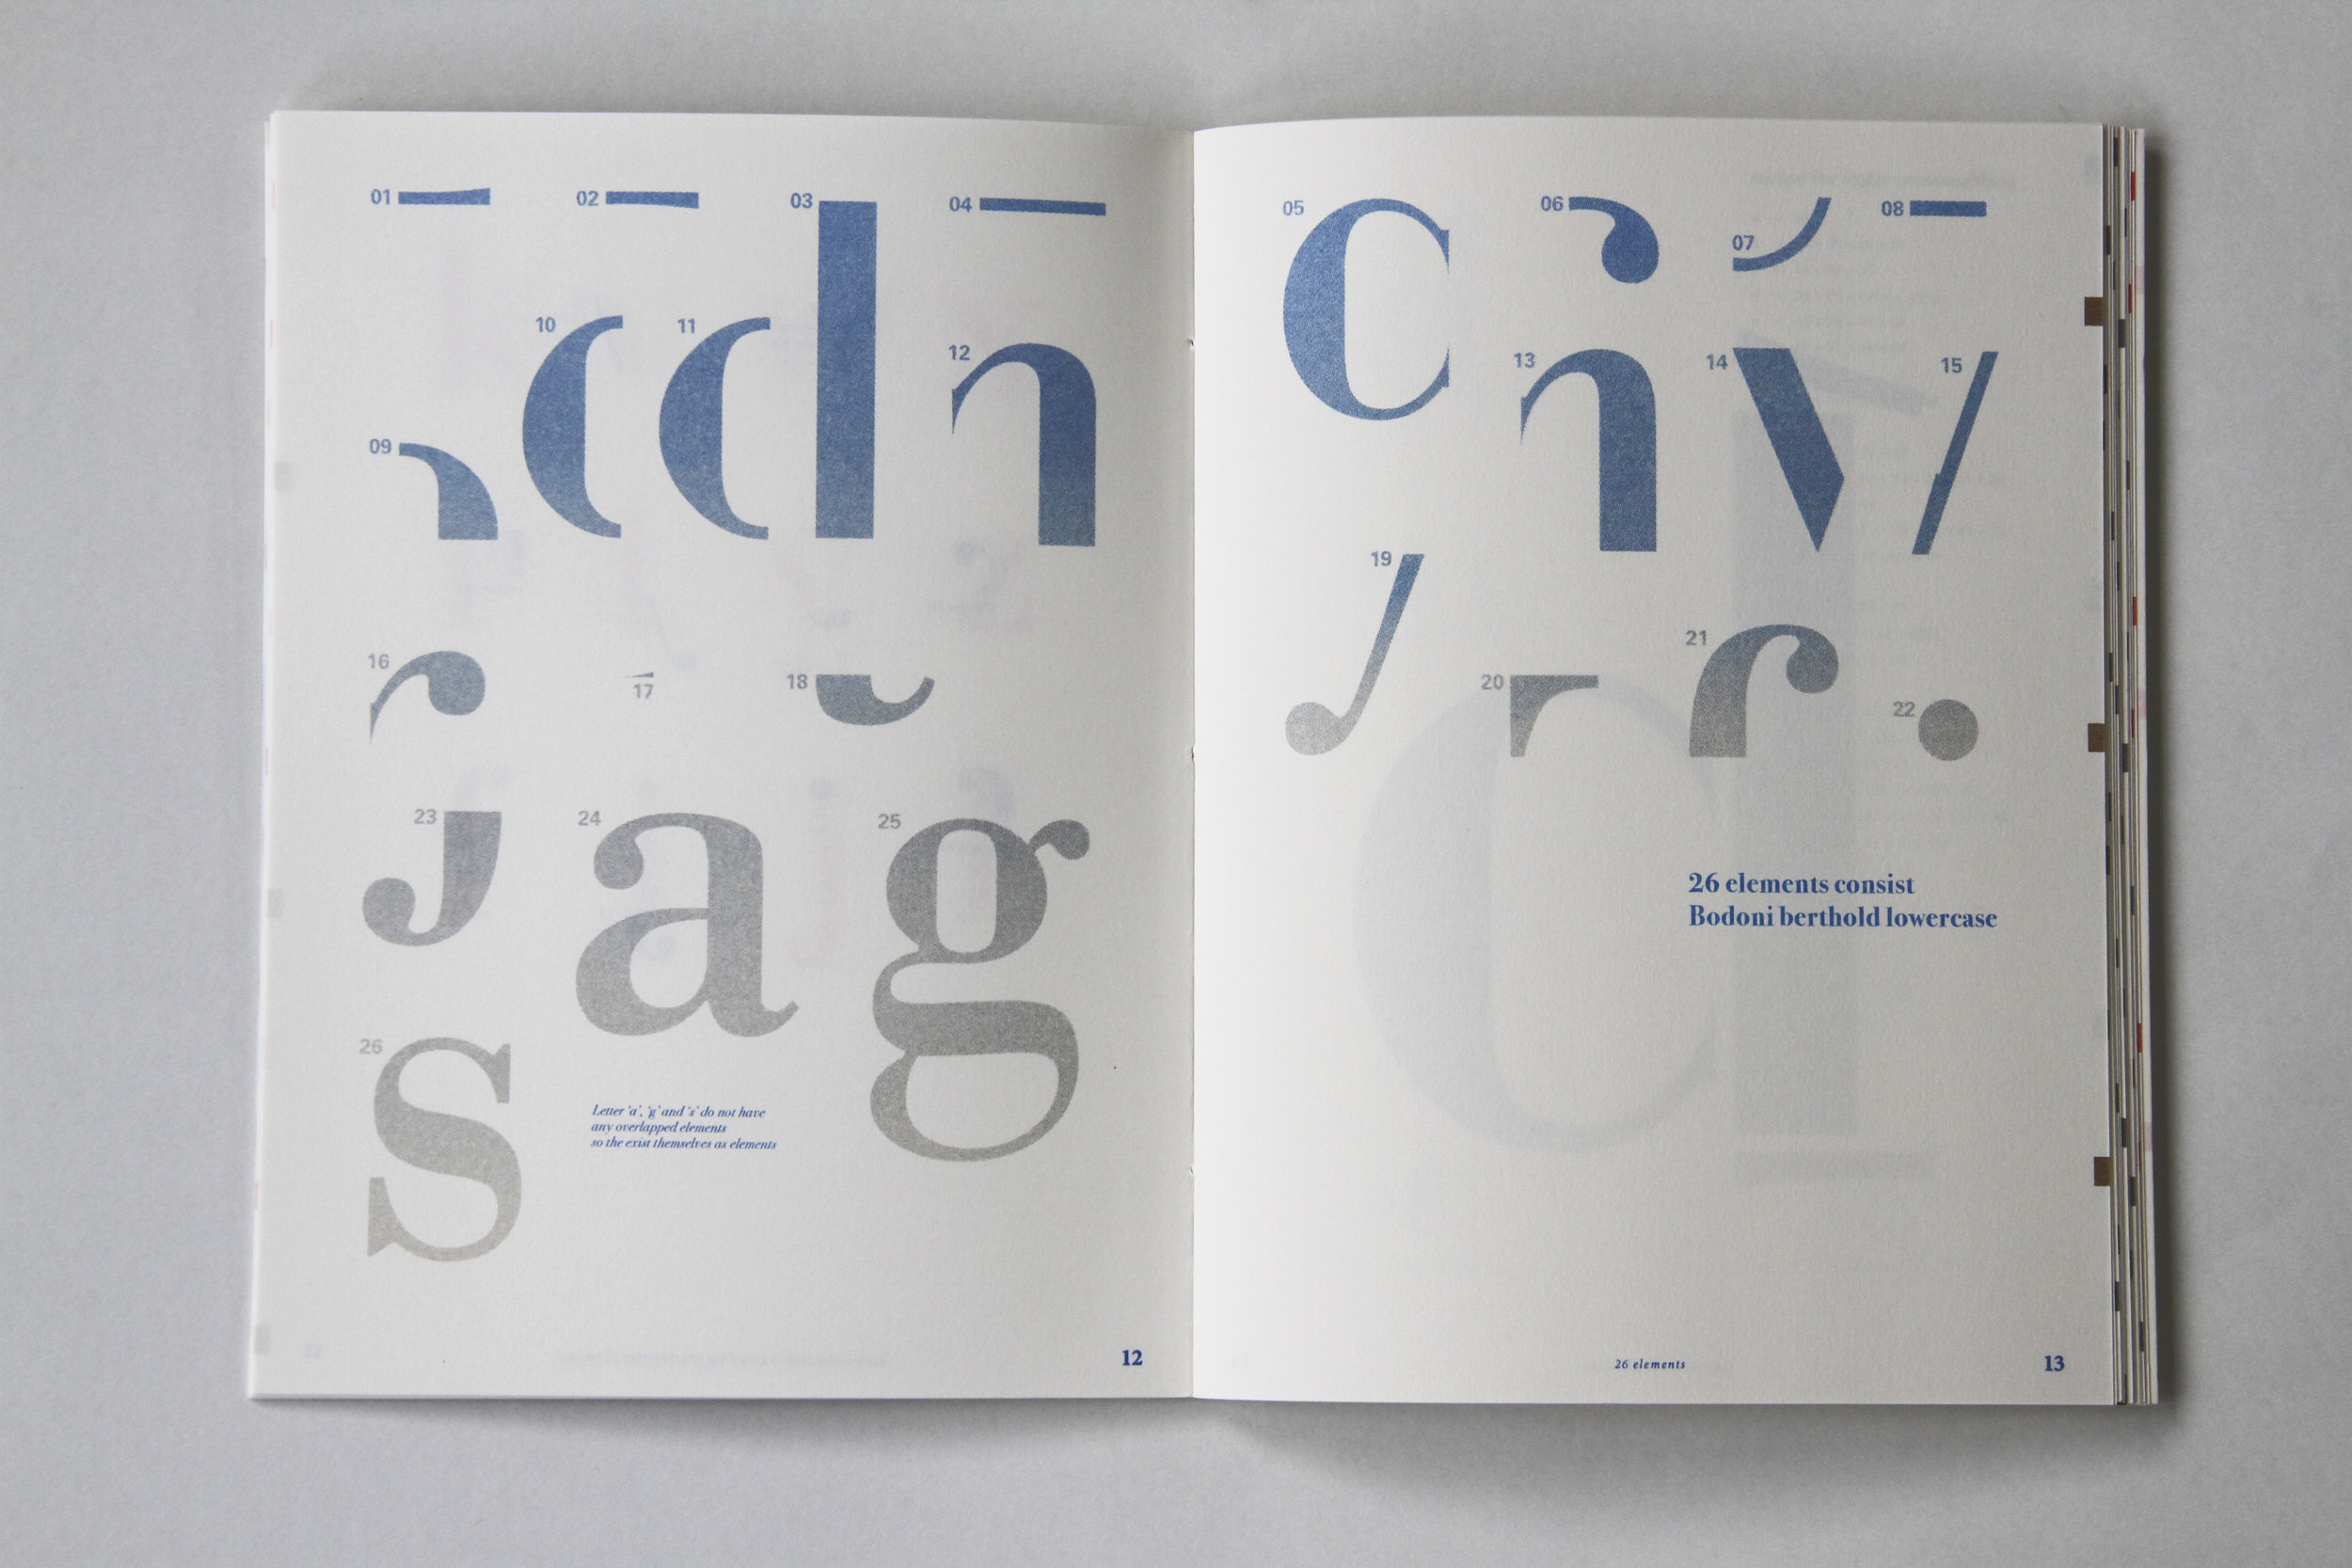  in process of _ making Bodoni typeface  90 x 260 x 10, Edition 100  Jan van Eyck Academie, Maastricht, 2019  2/2 stencil print     